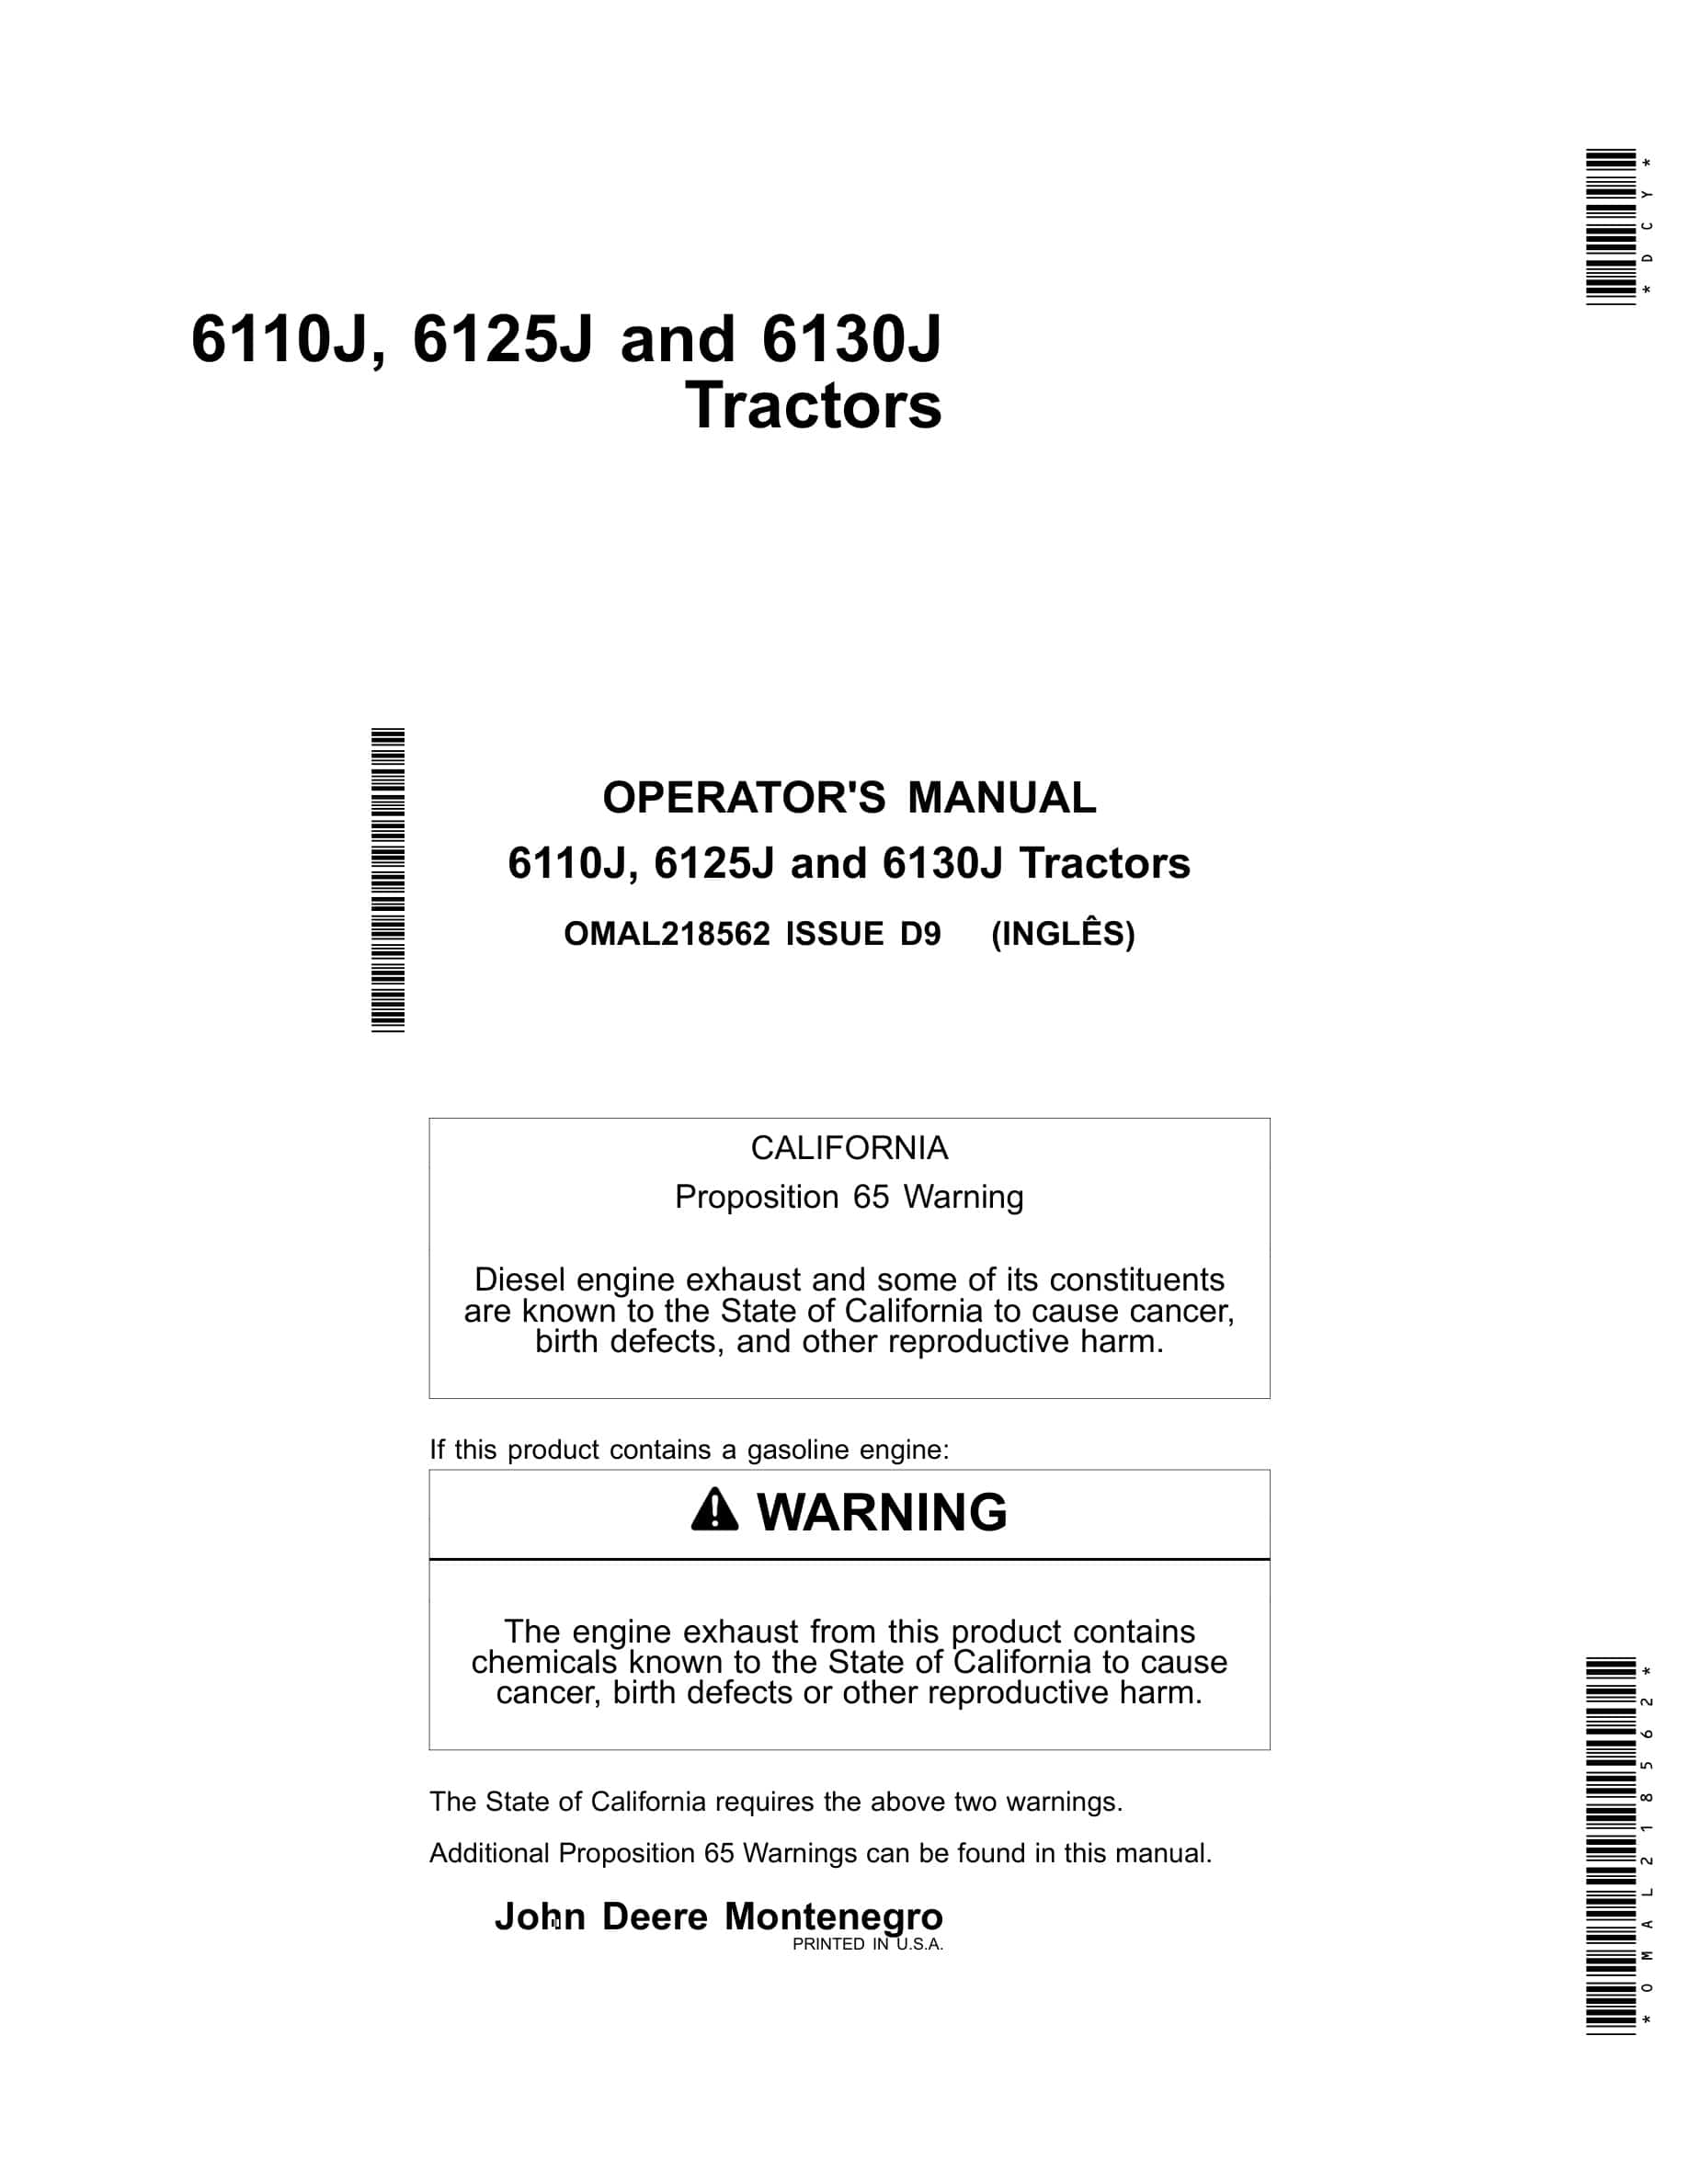 John Deere 6110j, 6125j And 6130j Tractors Operator Manuals OMAL218562-1